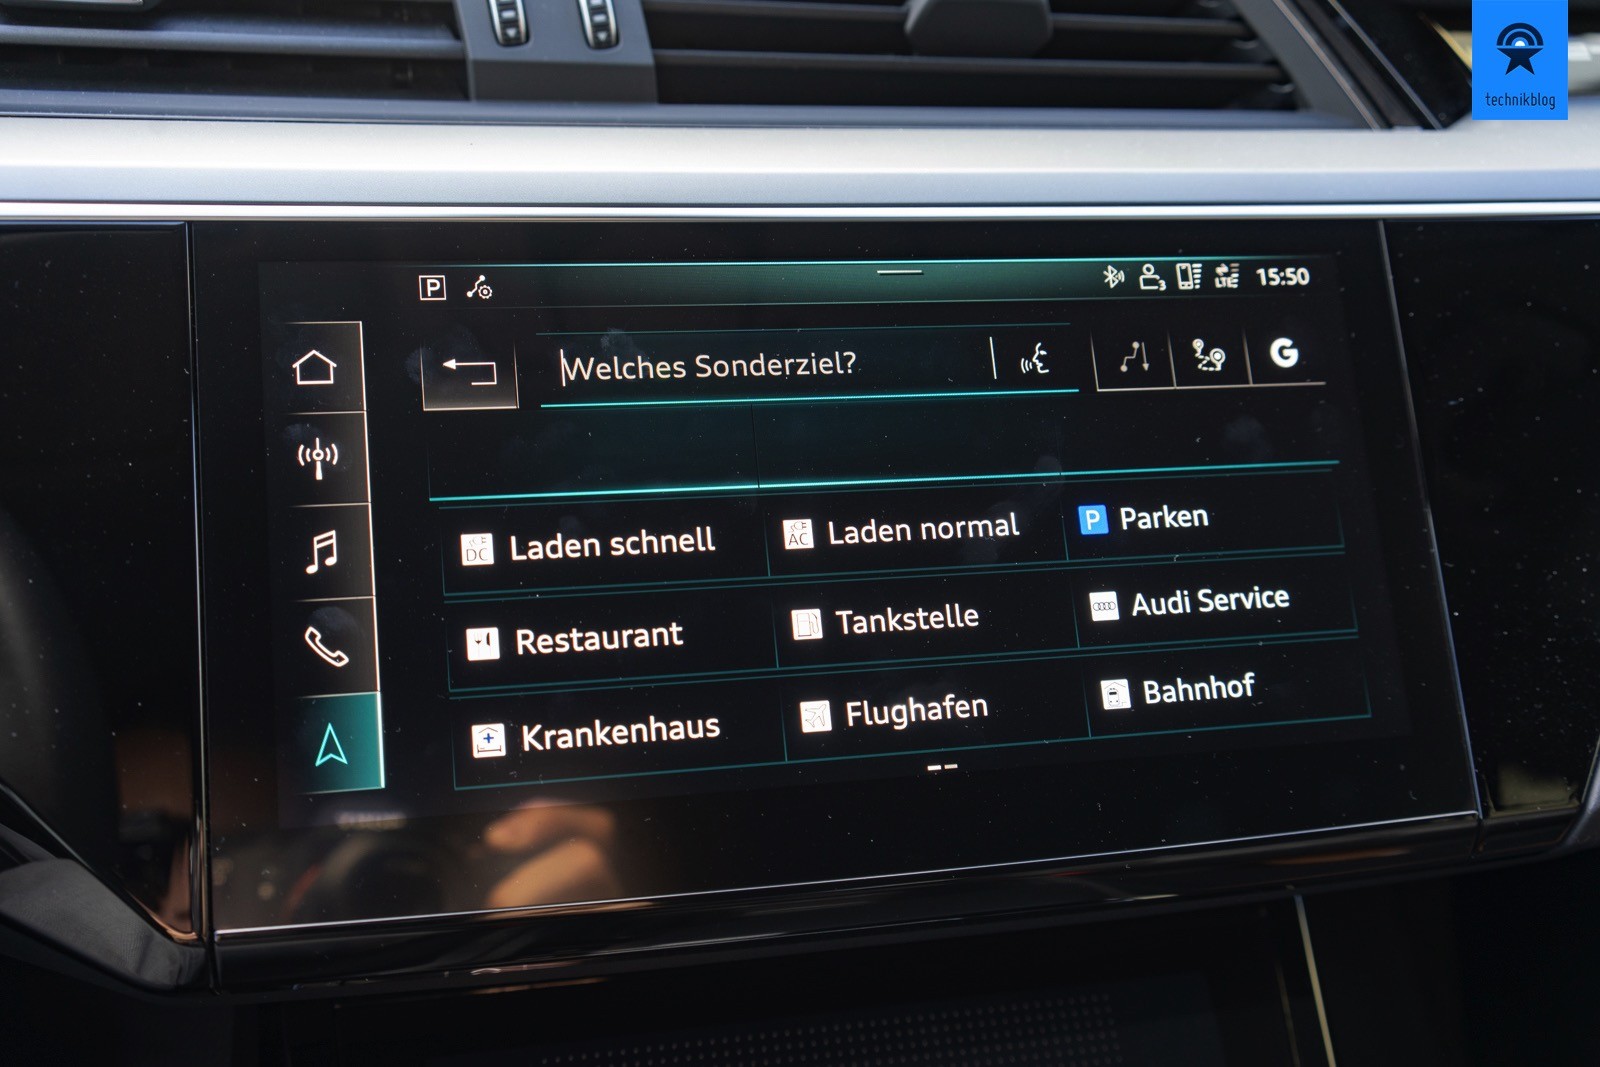 Sonderziele in der Navigation des Audi e-tron